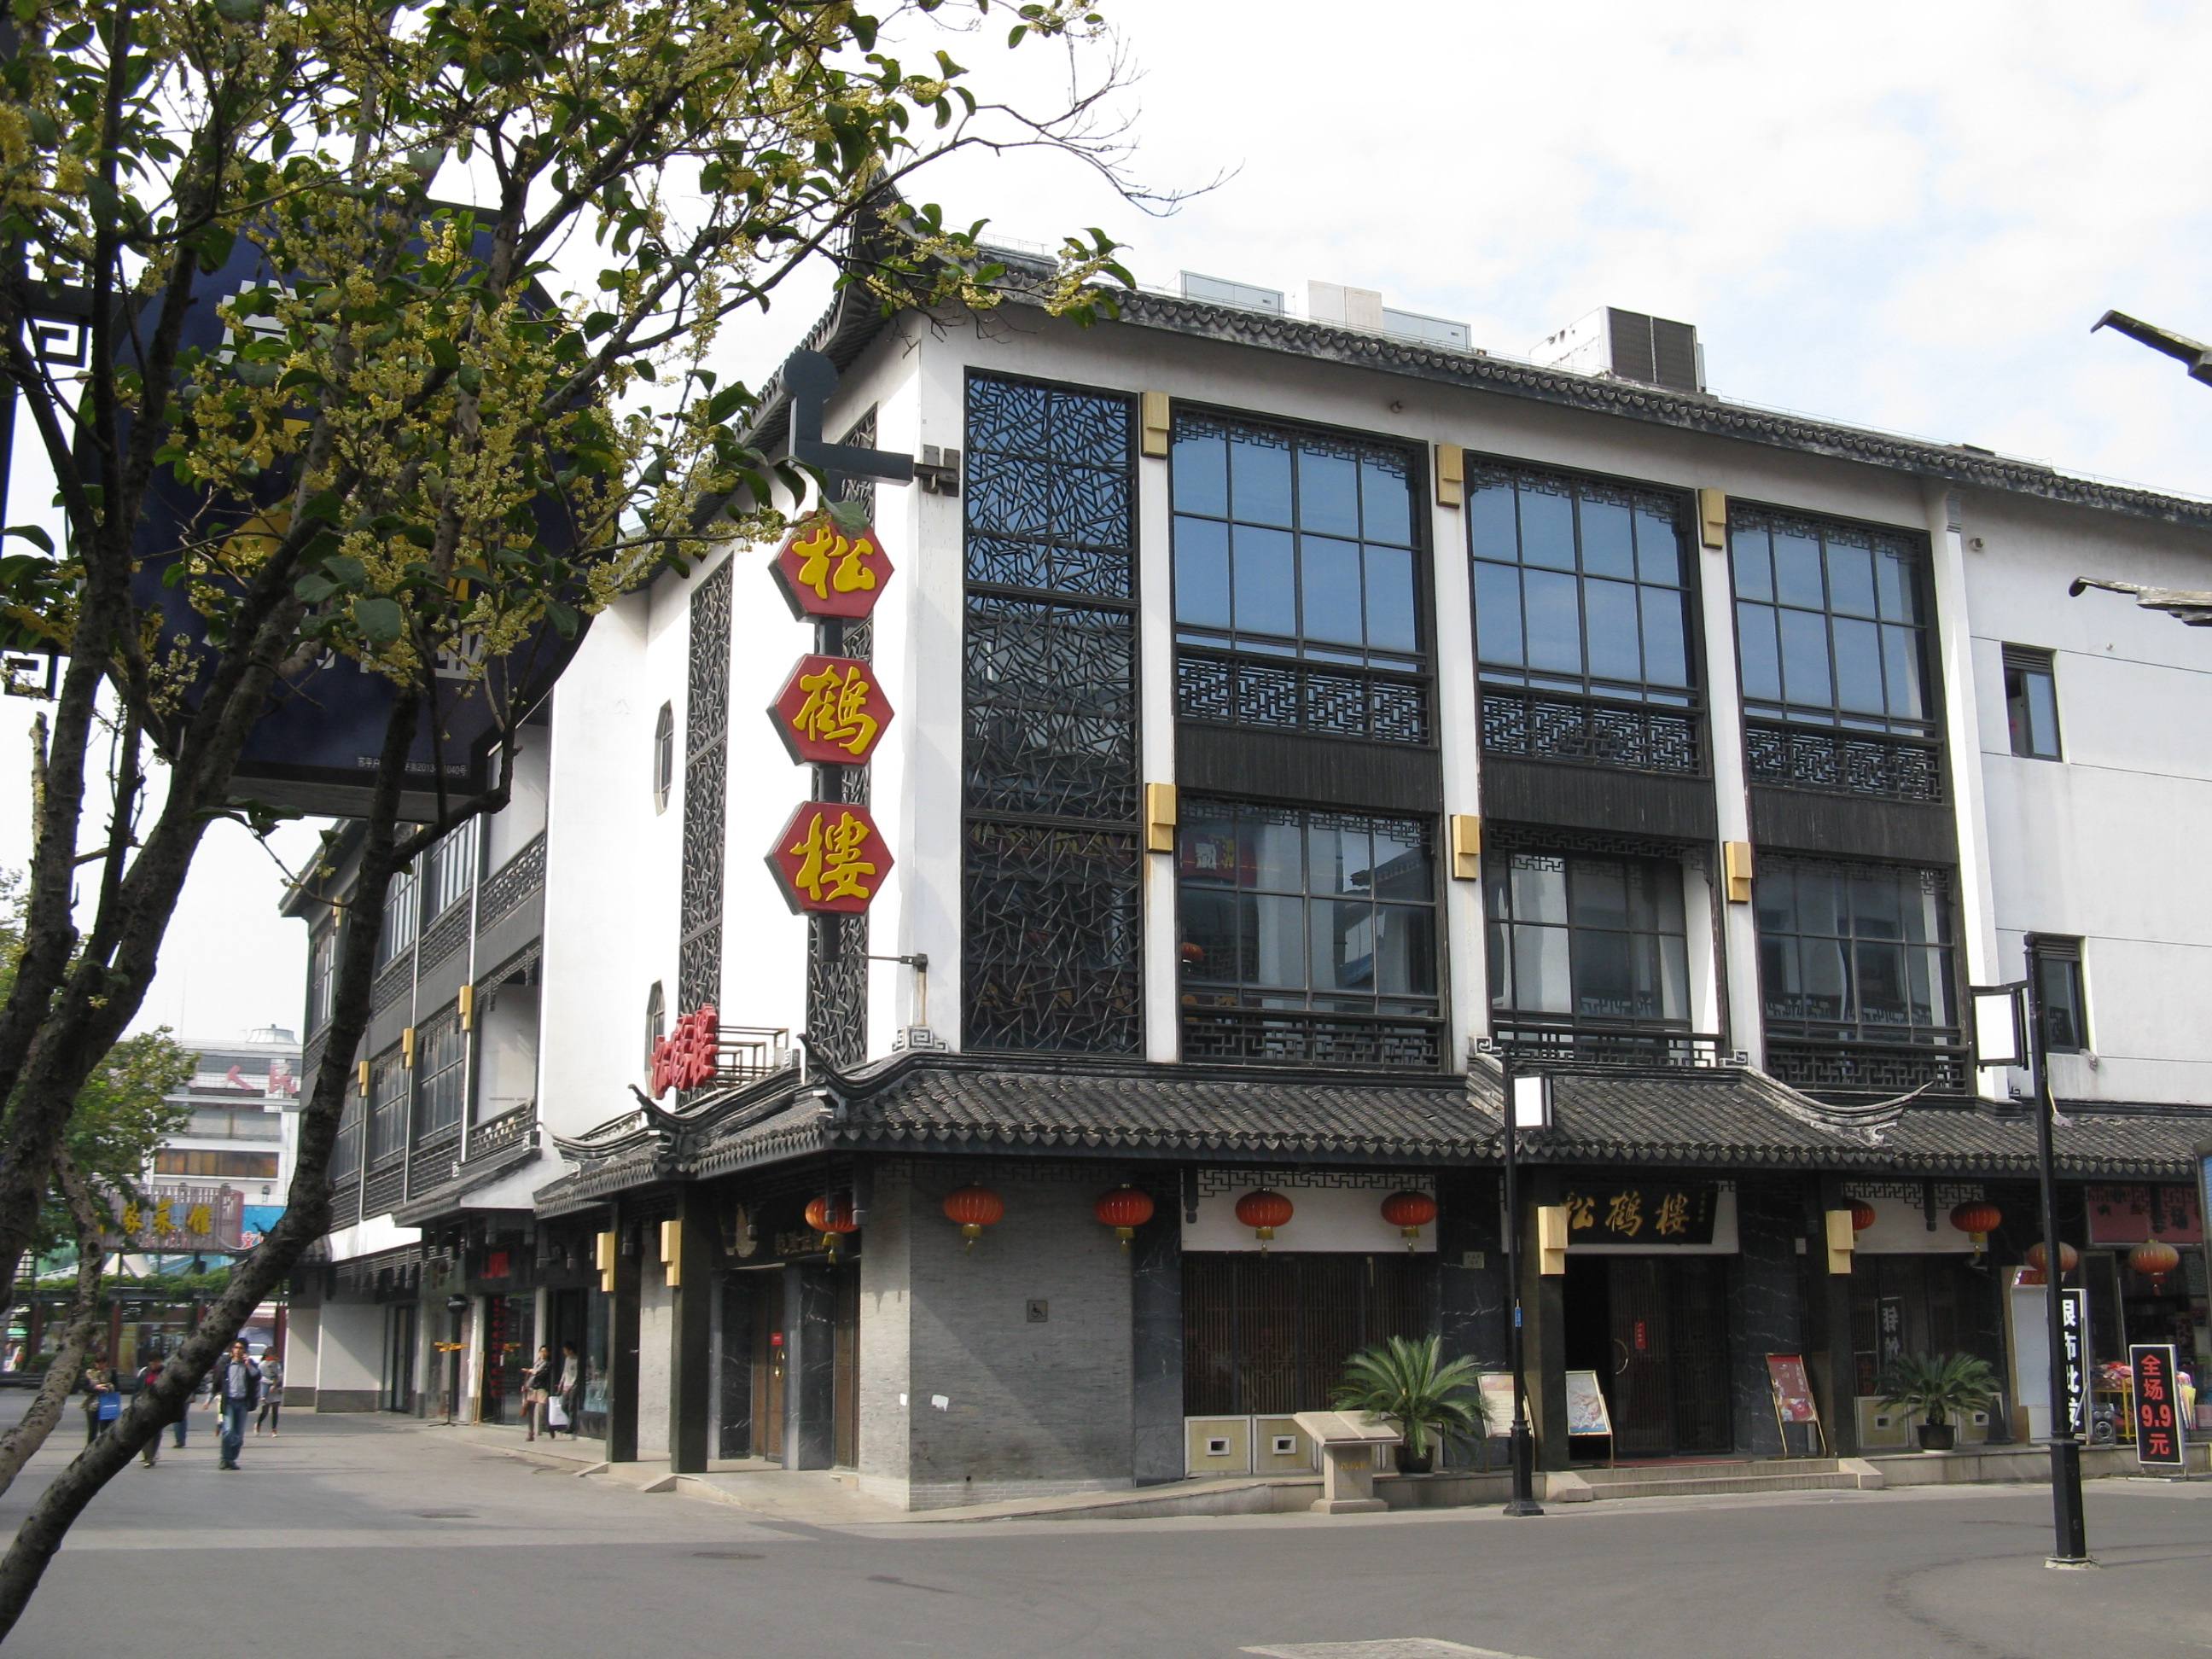 Suzhou Songhelou Restaurant